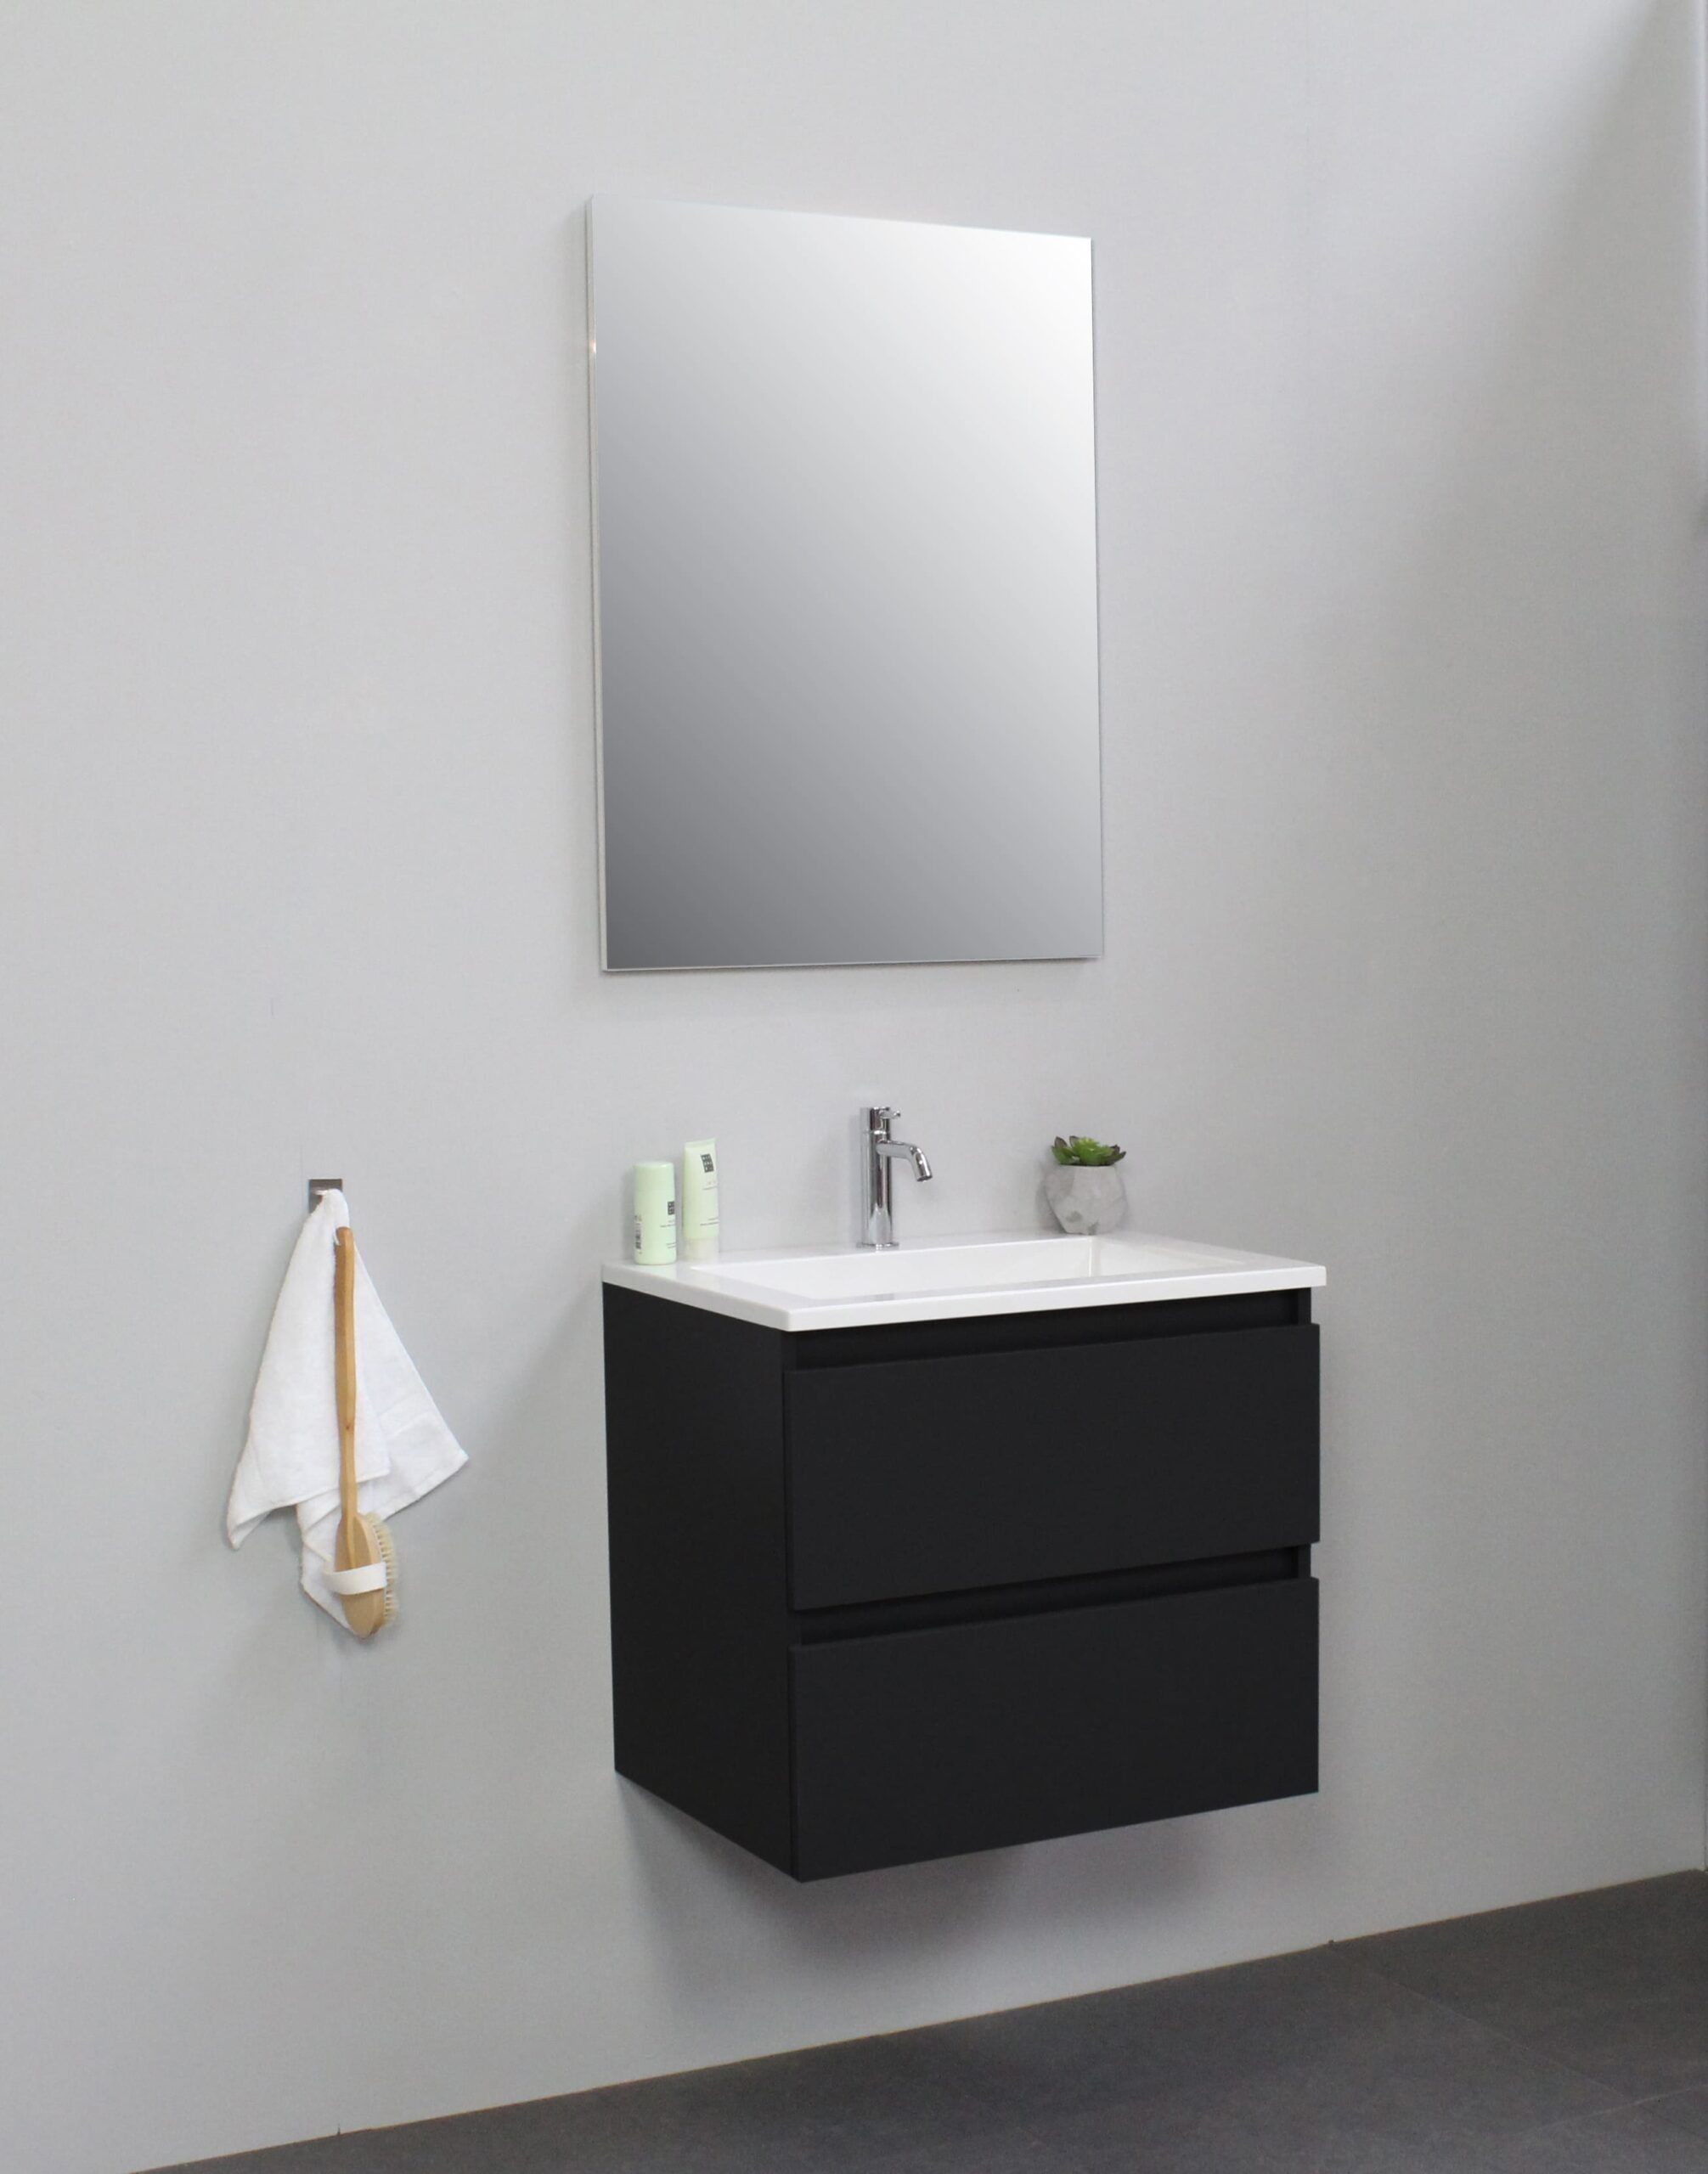 Sanilet badkamermeubel - 60cm - mat zwarte onderkast - mat zwart acryl wastafel - 1 kraangat - spiegel - bouwpakket - Badkamermeubel outlet